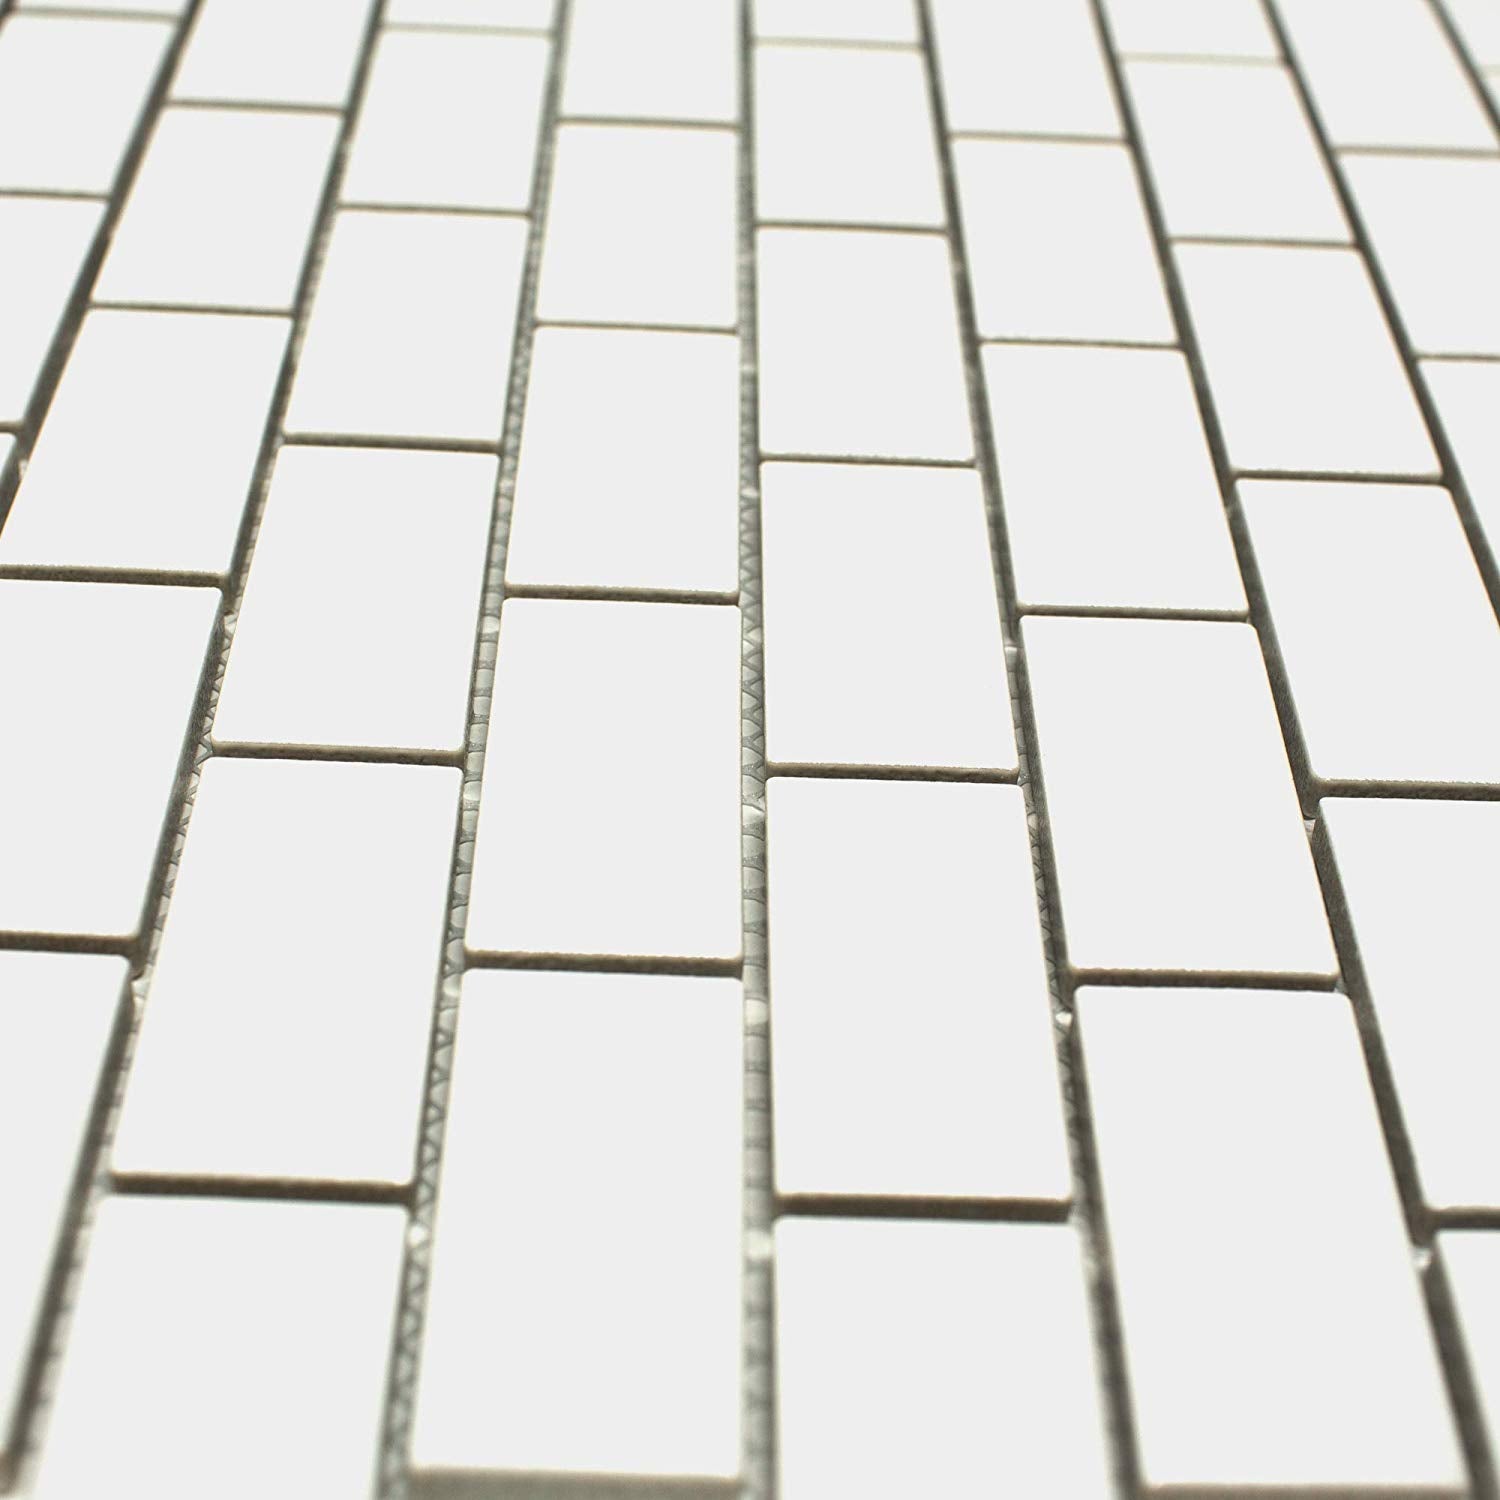 White 1x2 Brick Porcelain Matte Finish Mosaic Wall Tile  for Kitchen Backsplash, Bathroom Shower, Accent decor